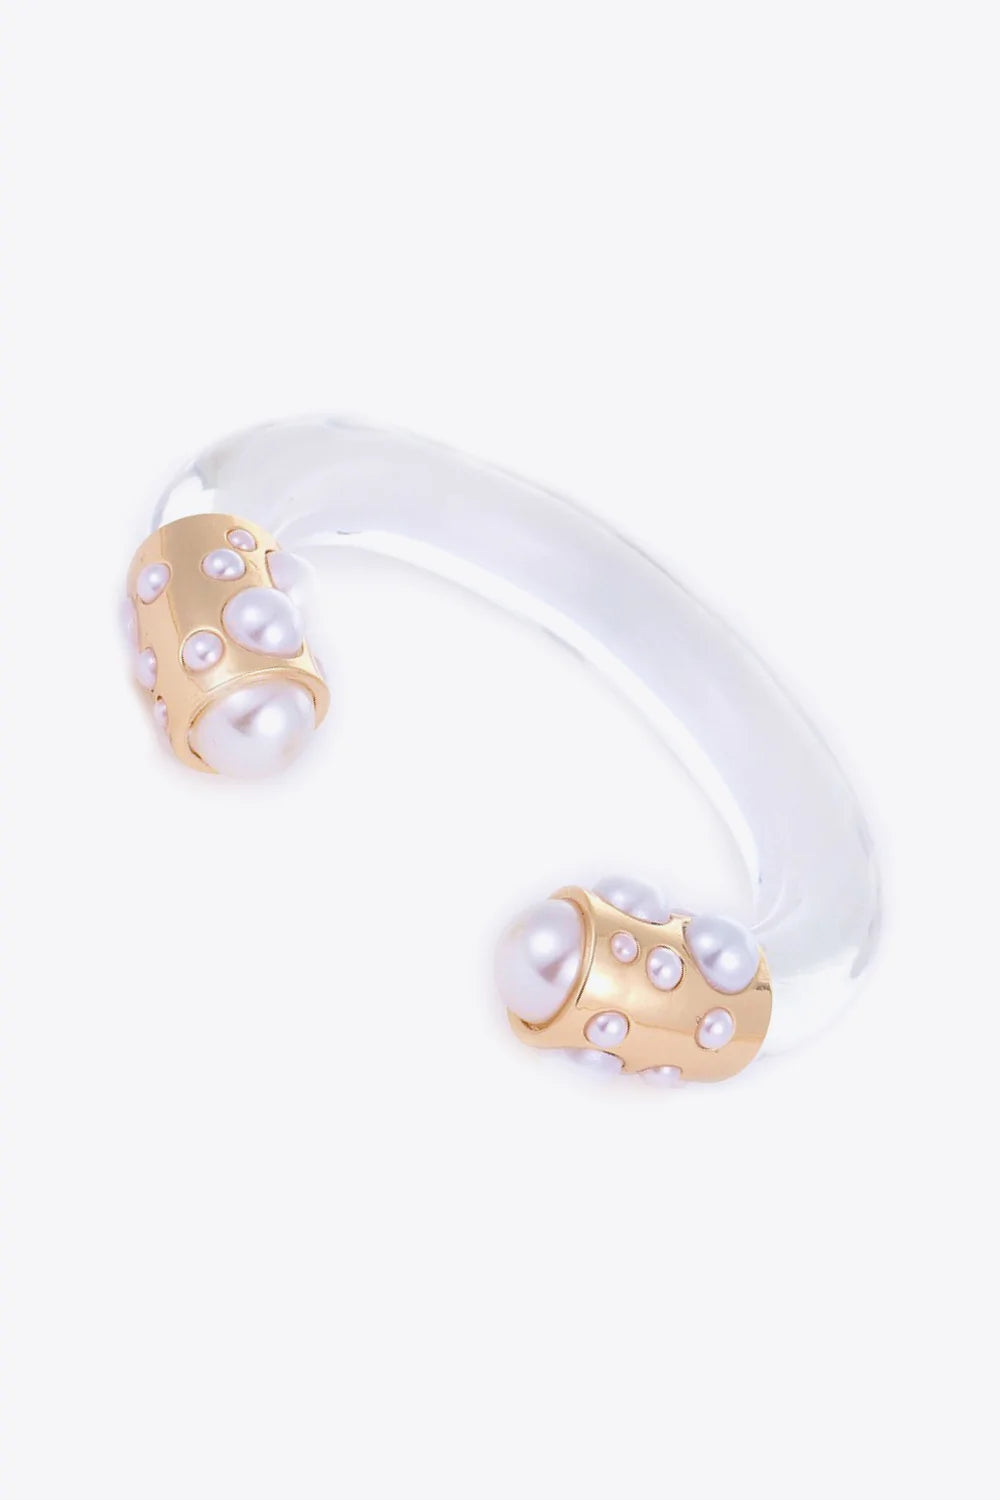 Inlaid Pearl Open Bracelet - Bracelets - FITGGINS